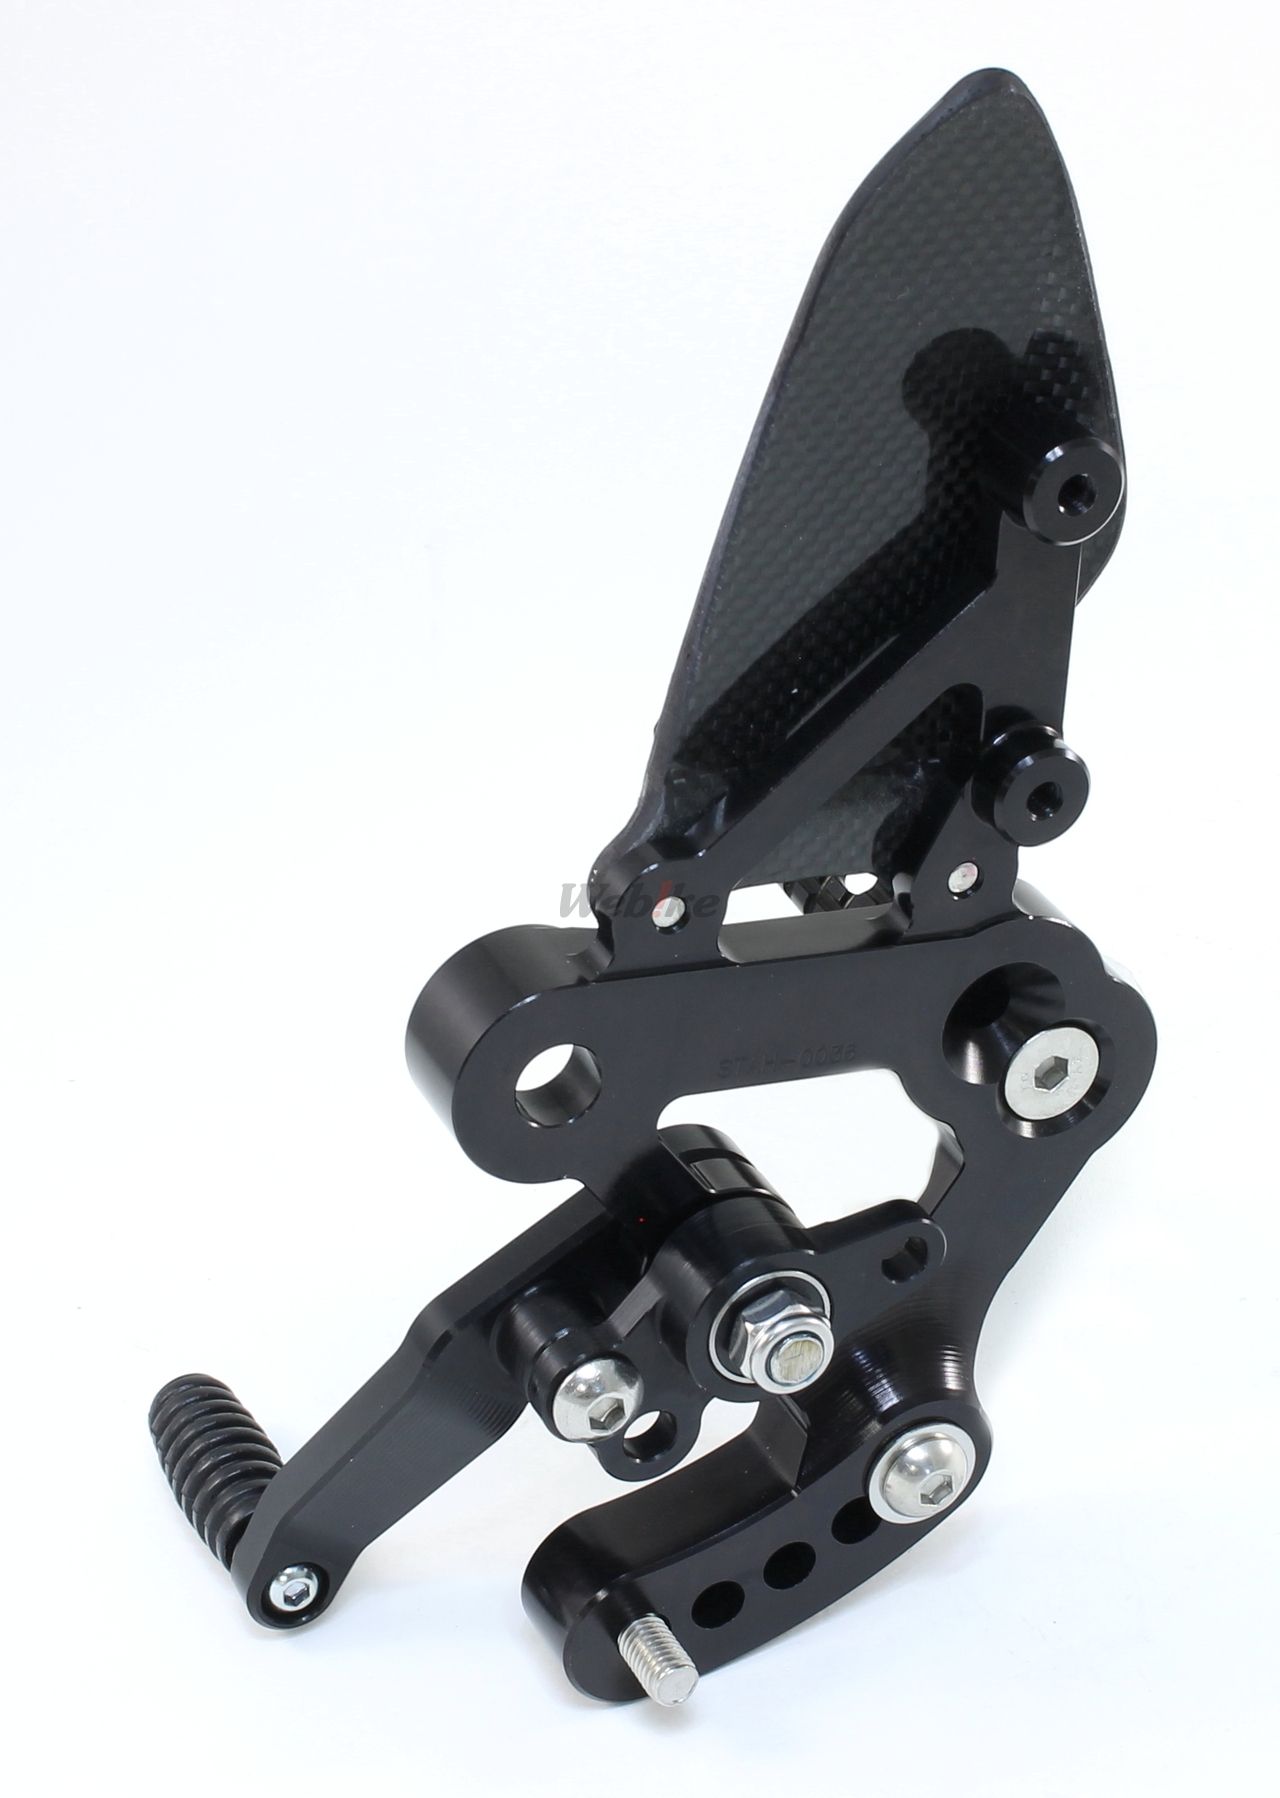 【TYGA PERFORMANCE】Racing Rear Set Kit, Adjustable, Black with Black Slot Cover, MSX125 Grom - Webike Thailand